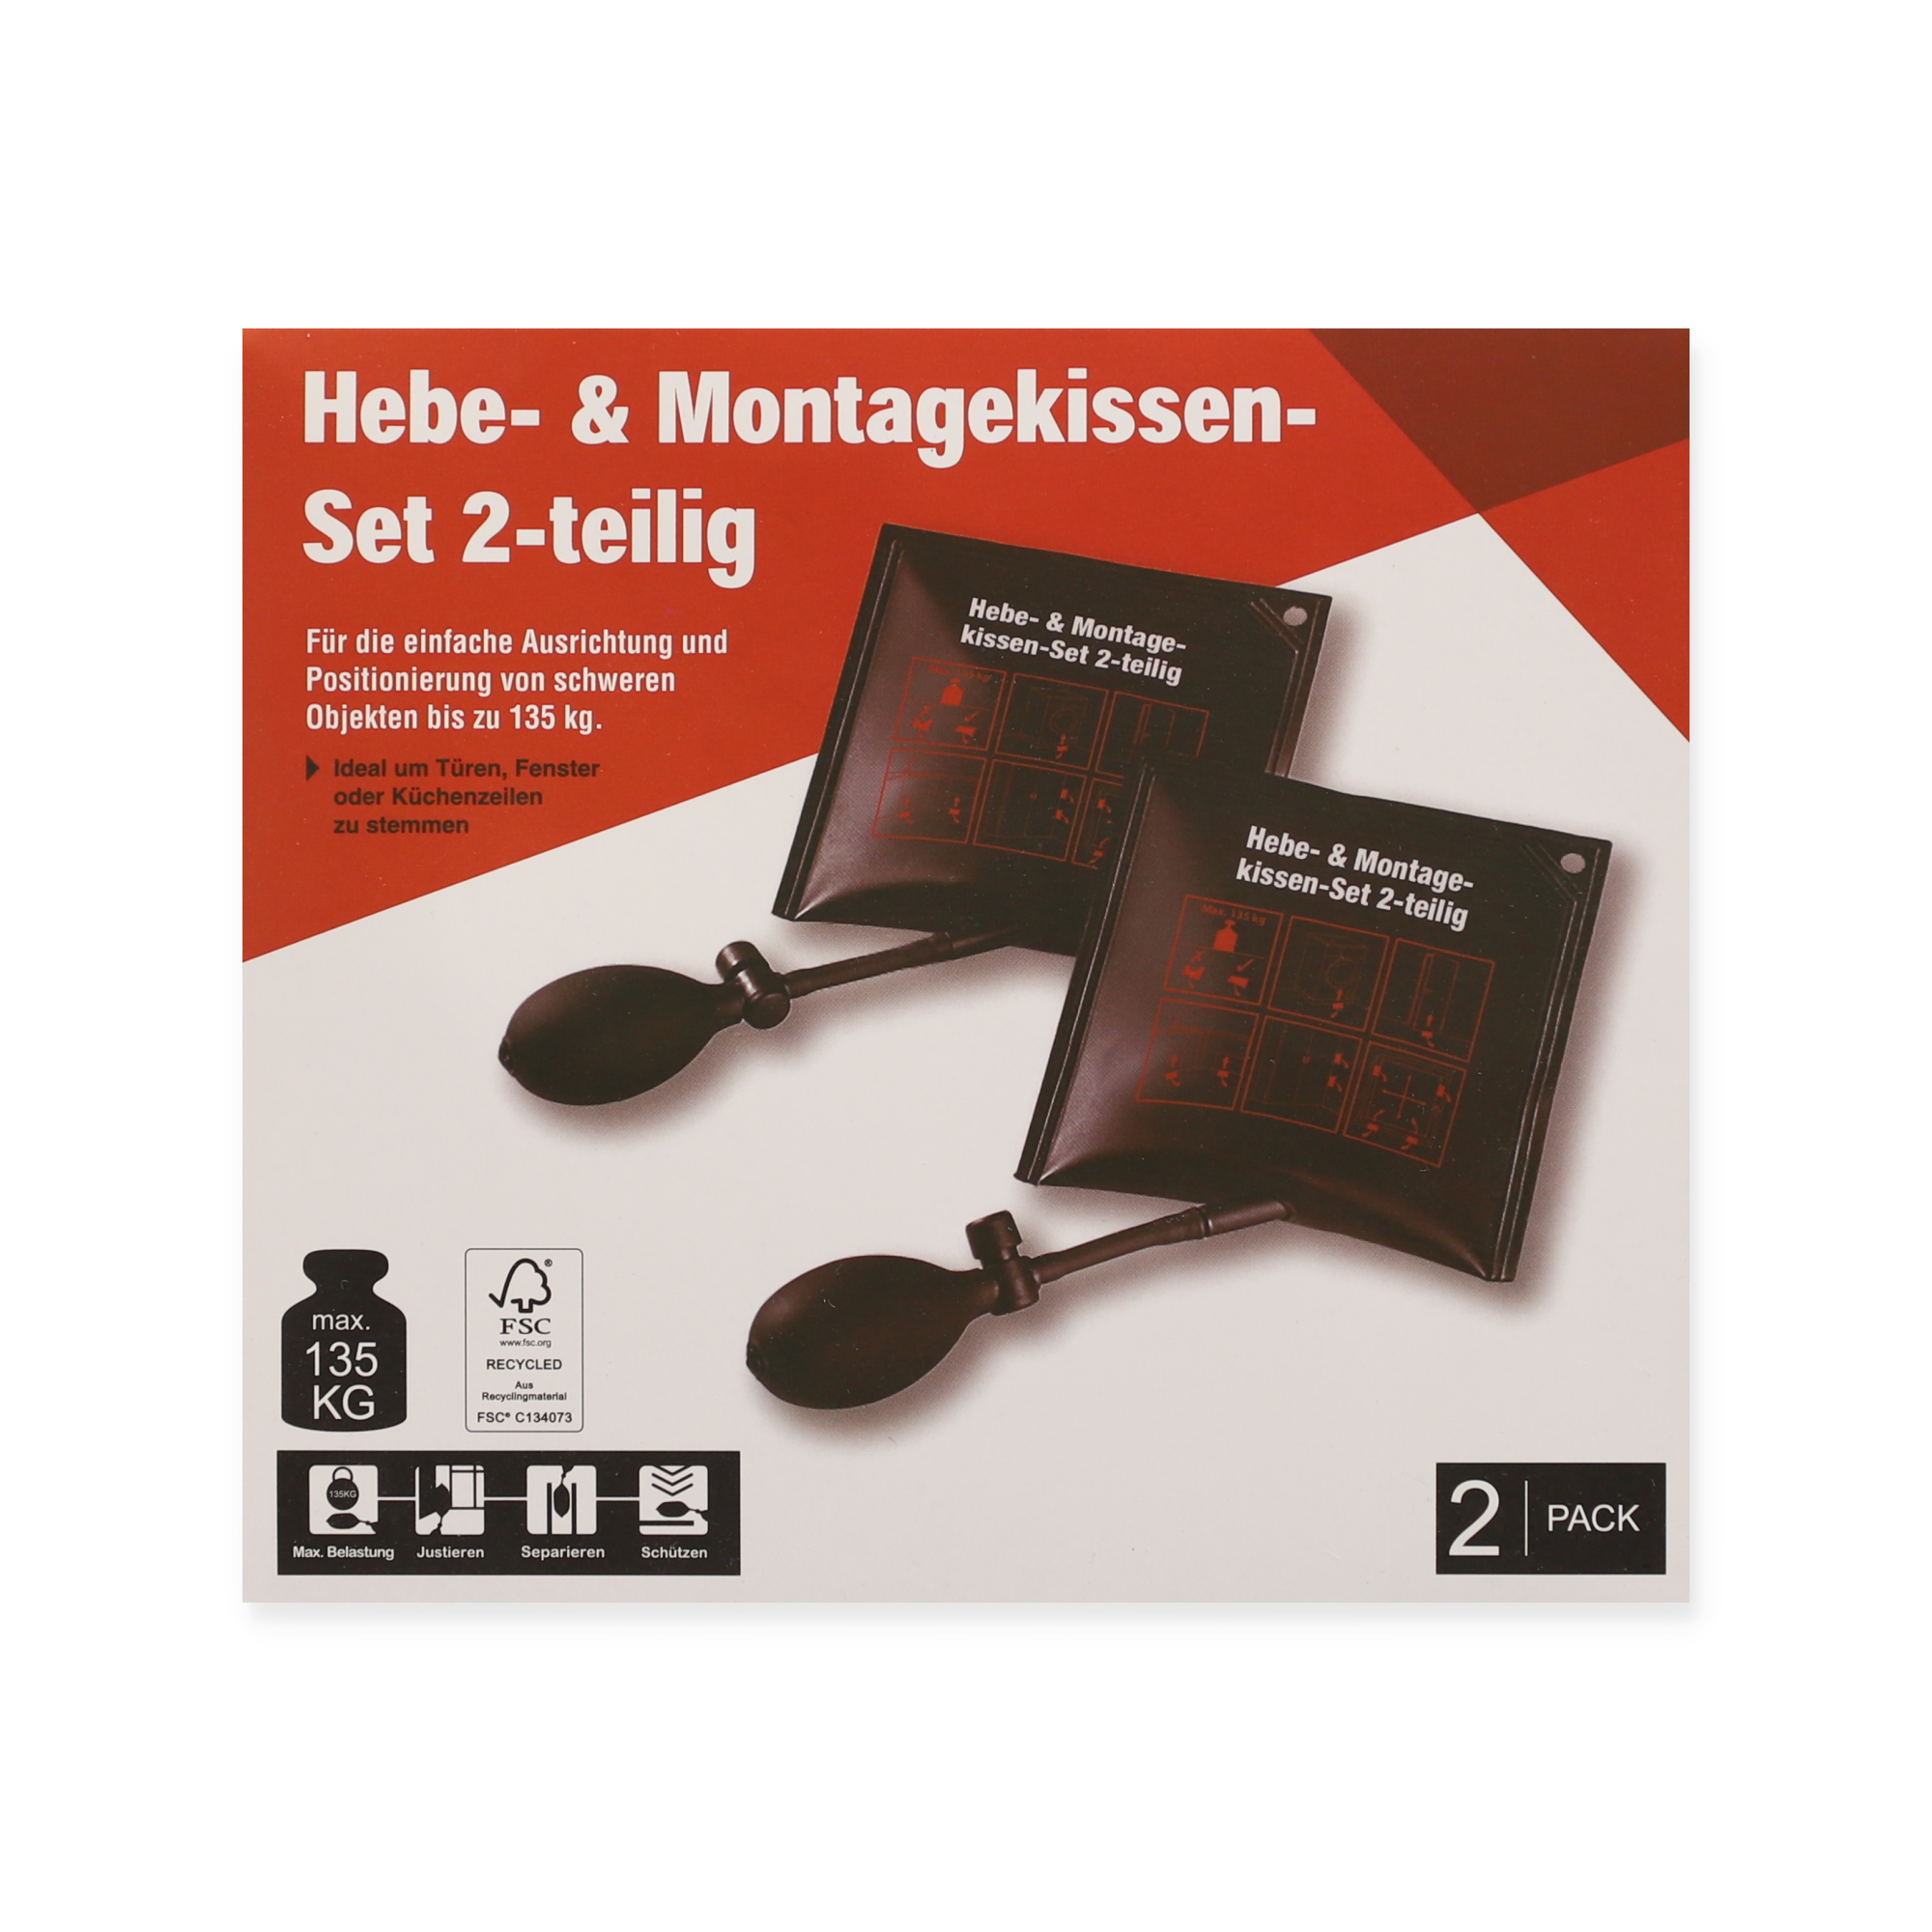 Hebe- & Montagekissen-Set 2 Stück + product picture